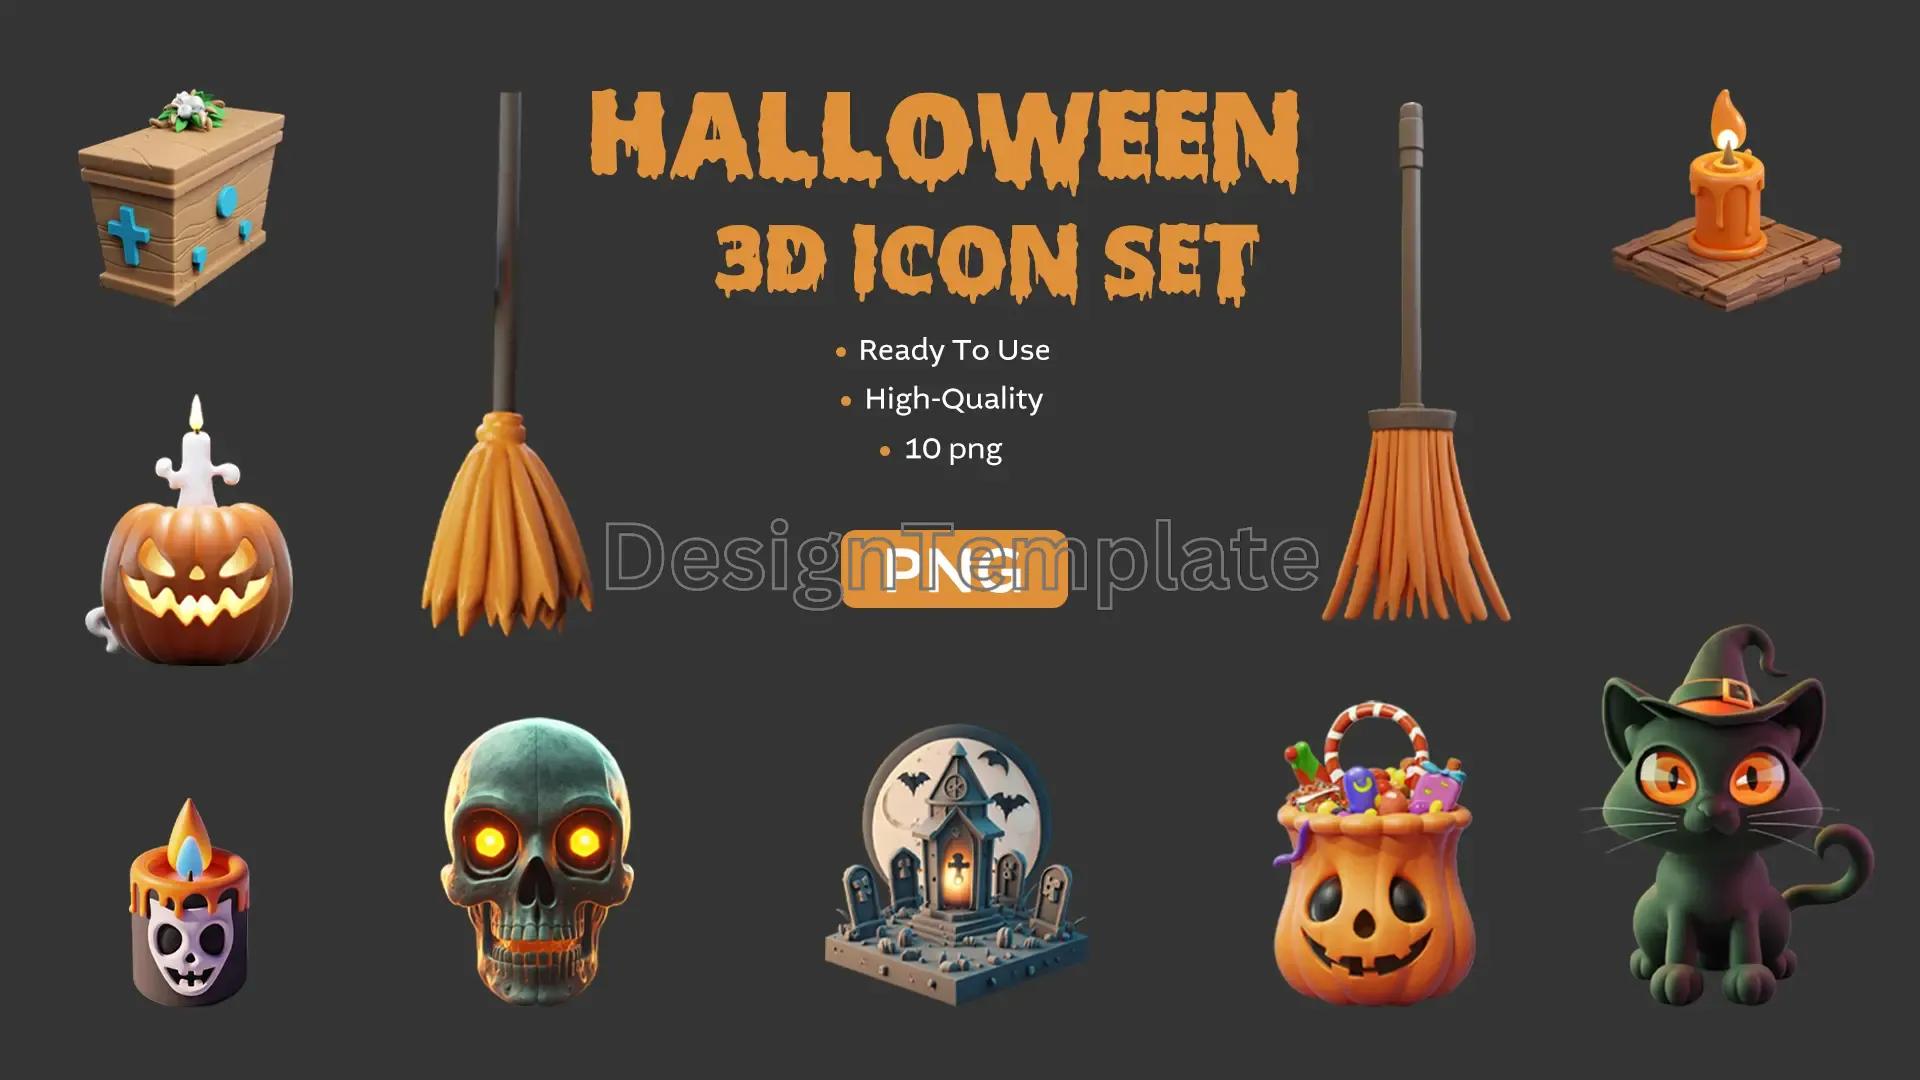 Spooky Delights Halloween 3D Elements Pack